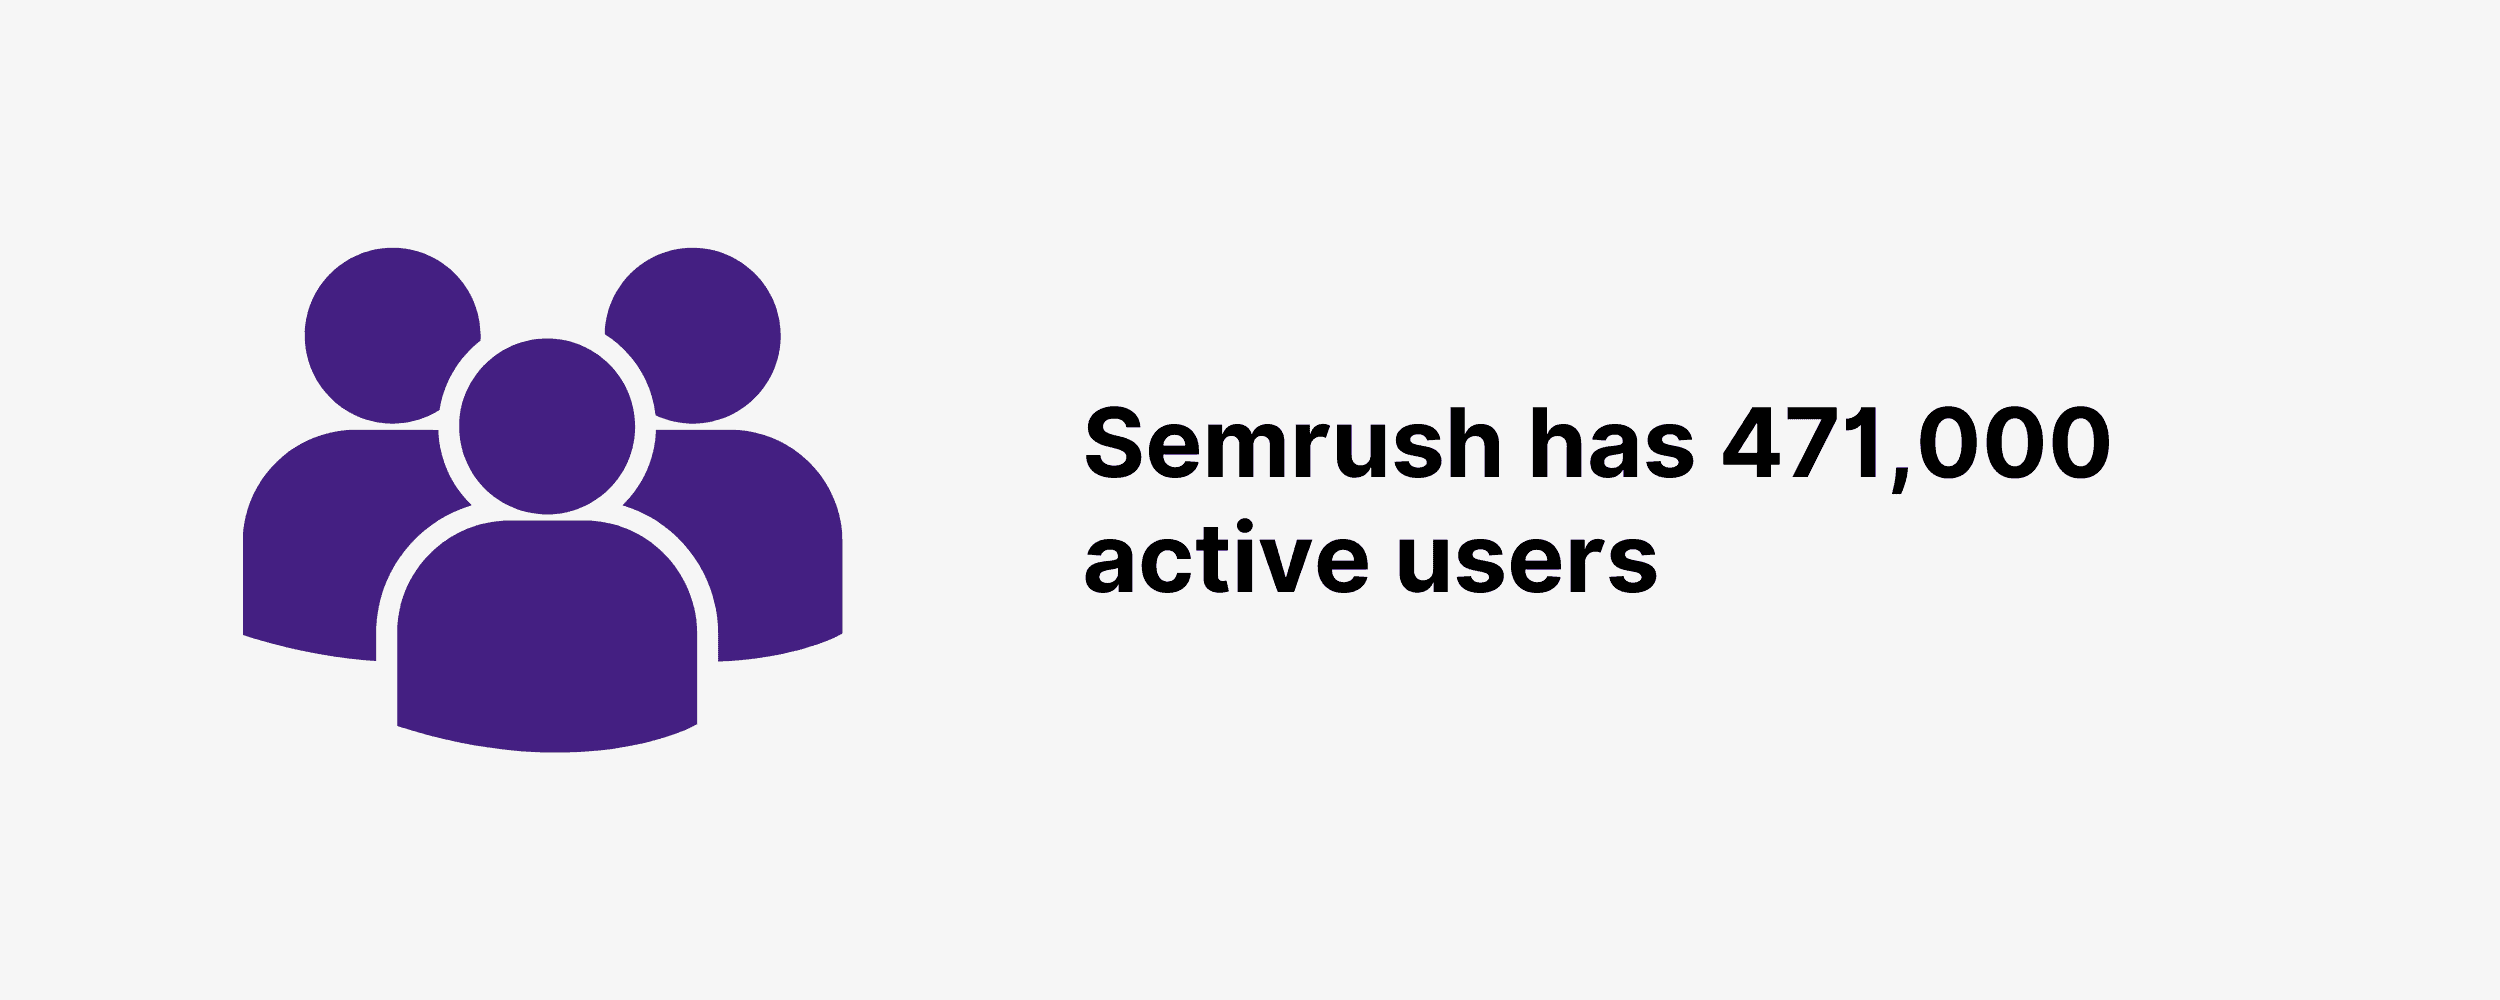 Semrush has 471,000 active users